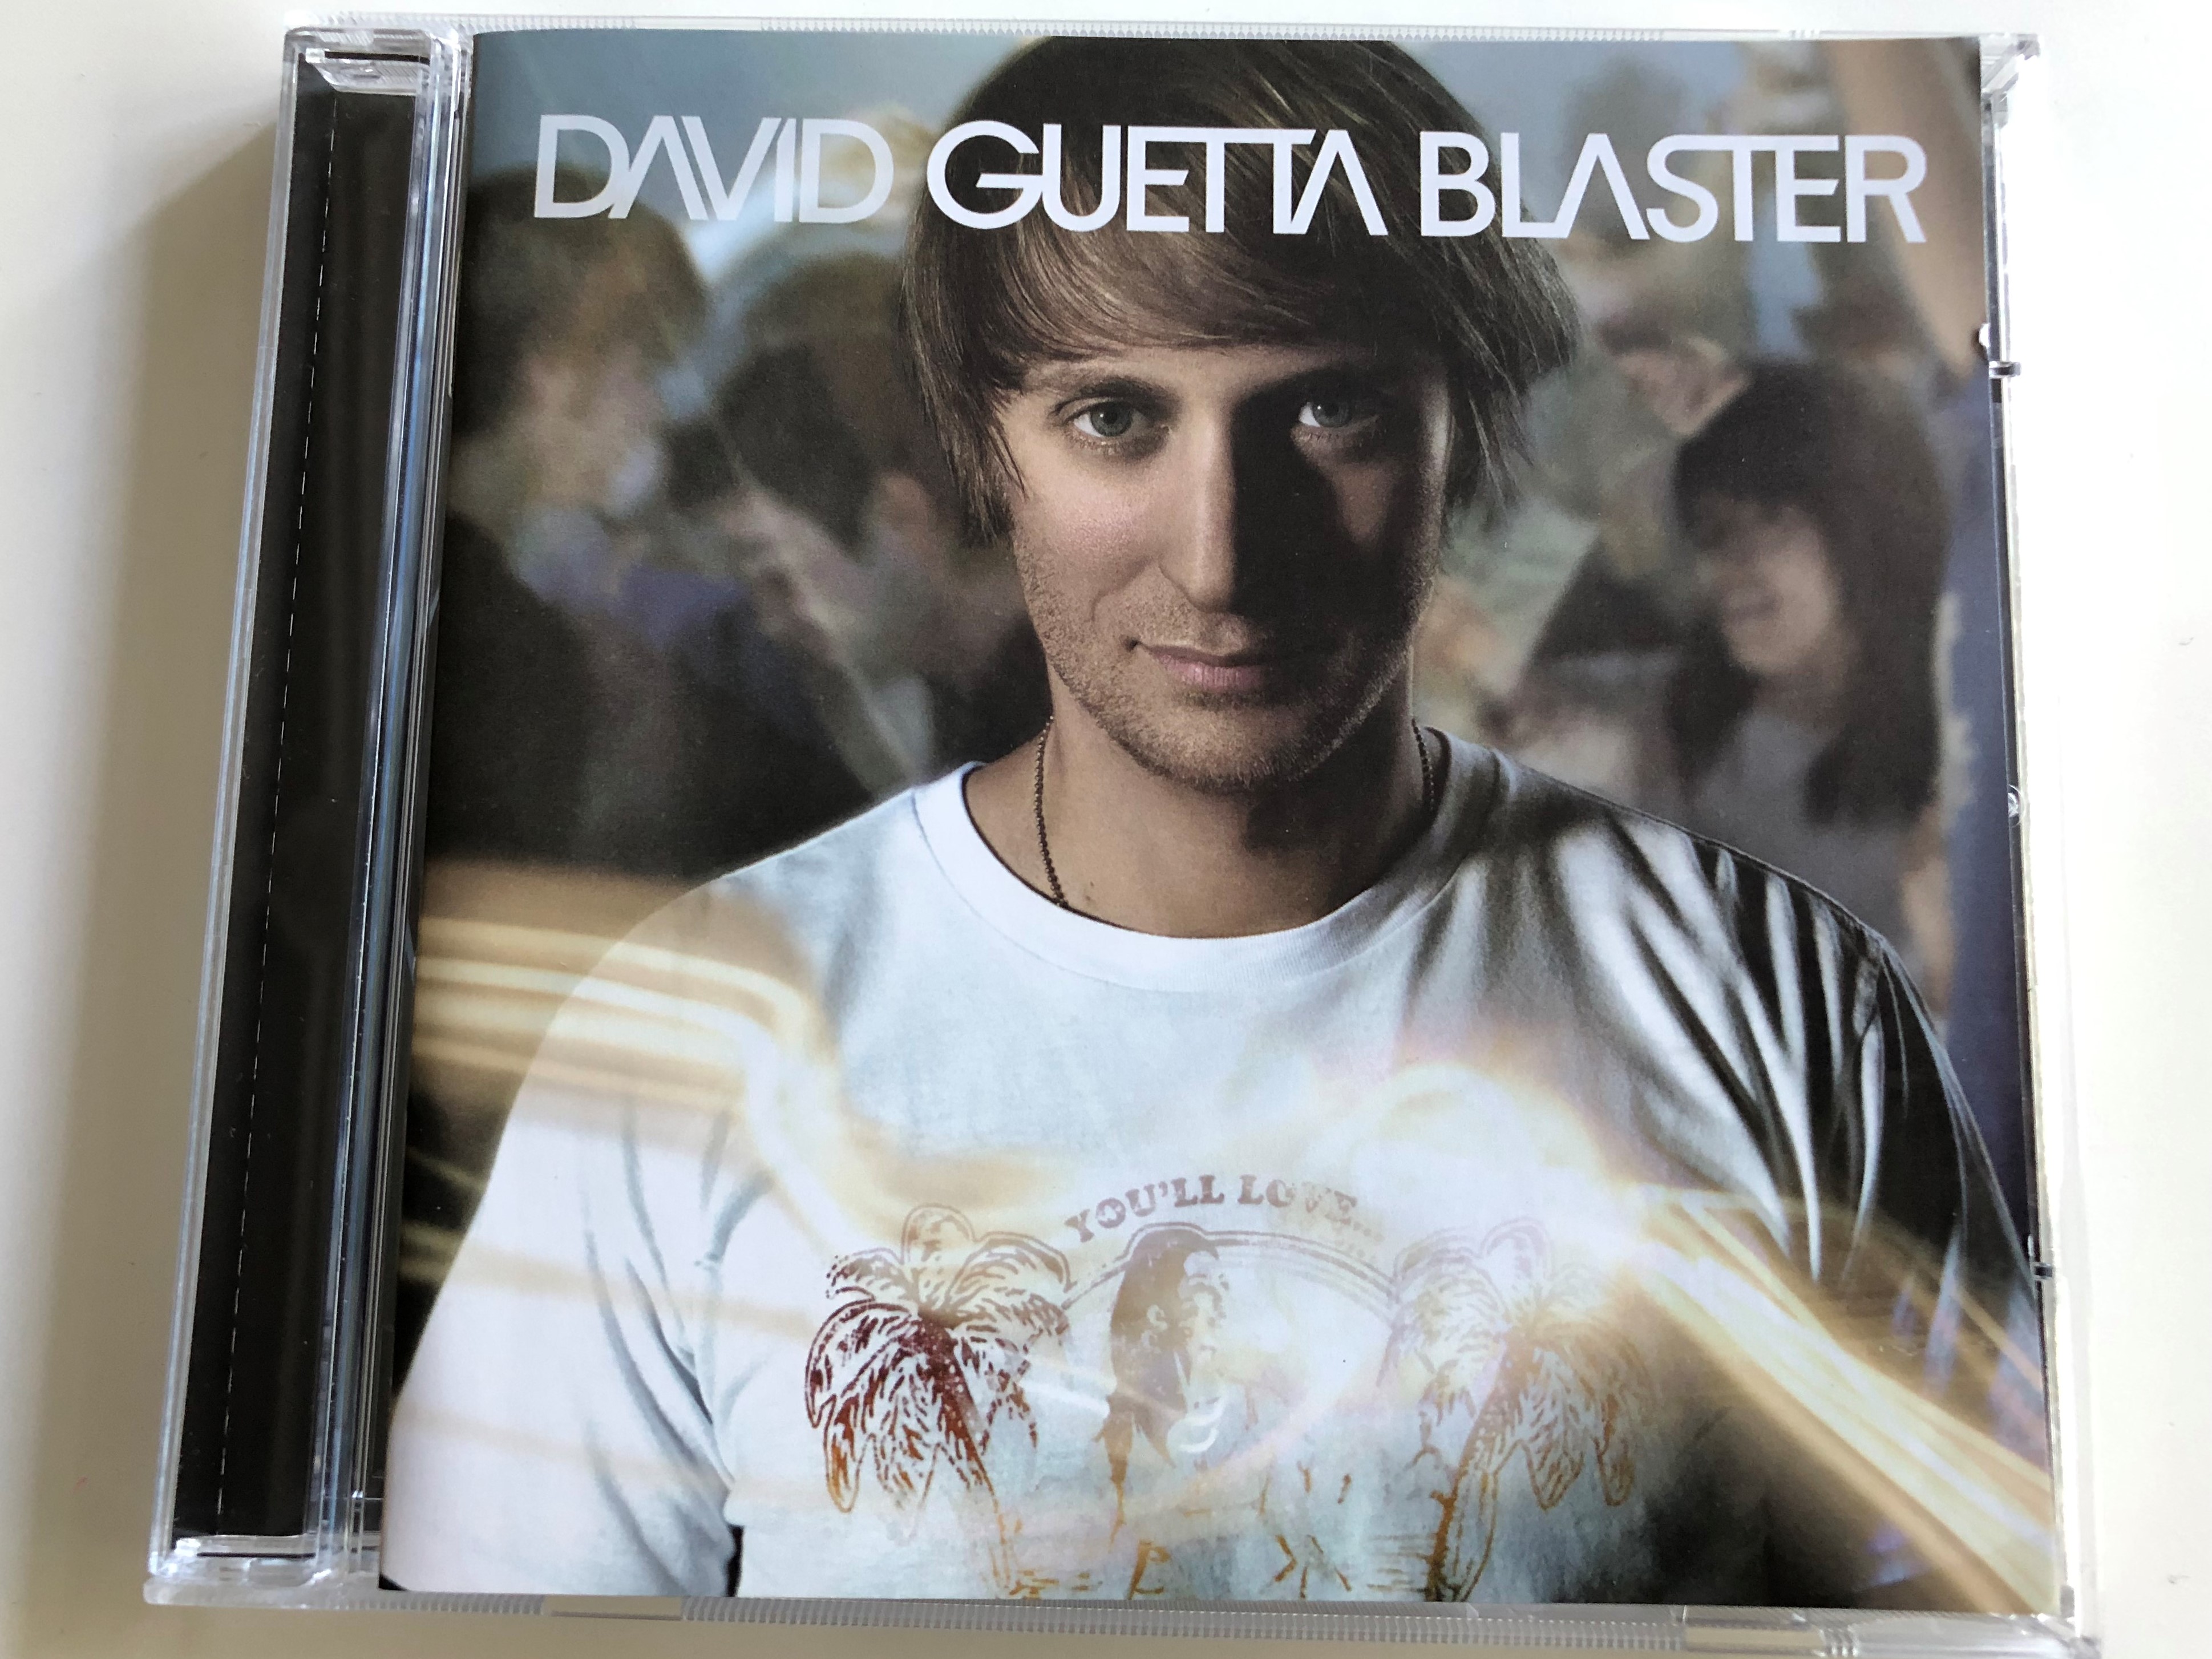 david-guetta-blaster-money-stay-open-your-eyes-get-up-audio-cd-2004-gum-records-1-.jpg